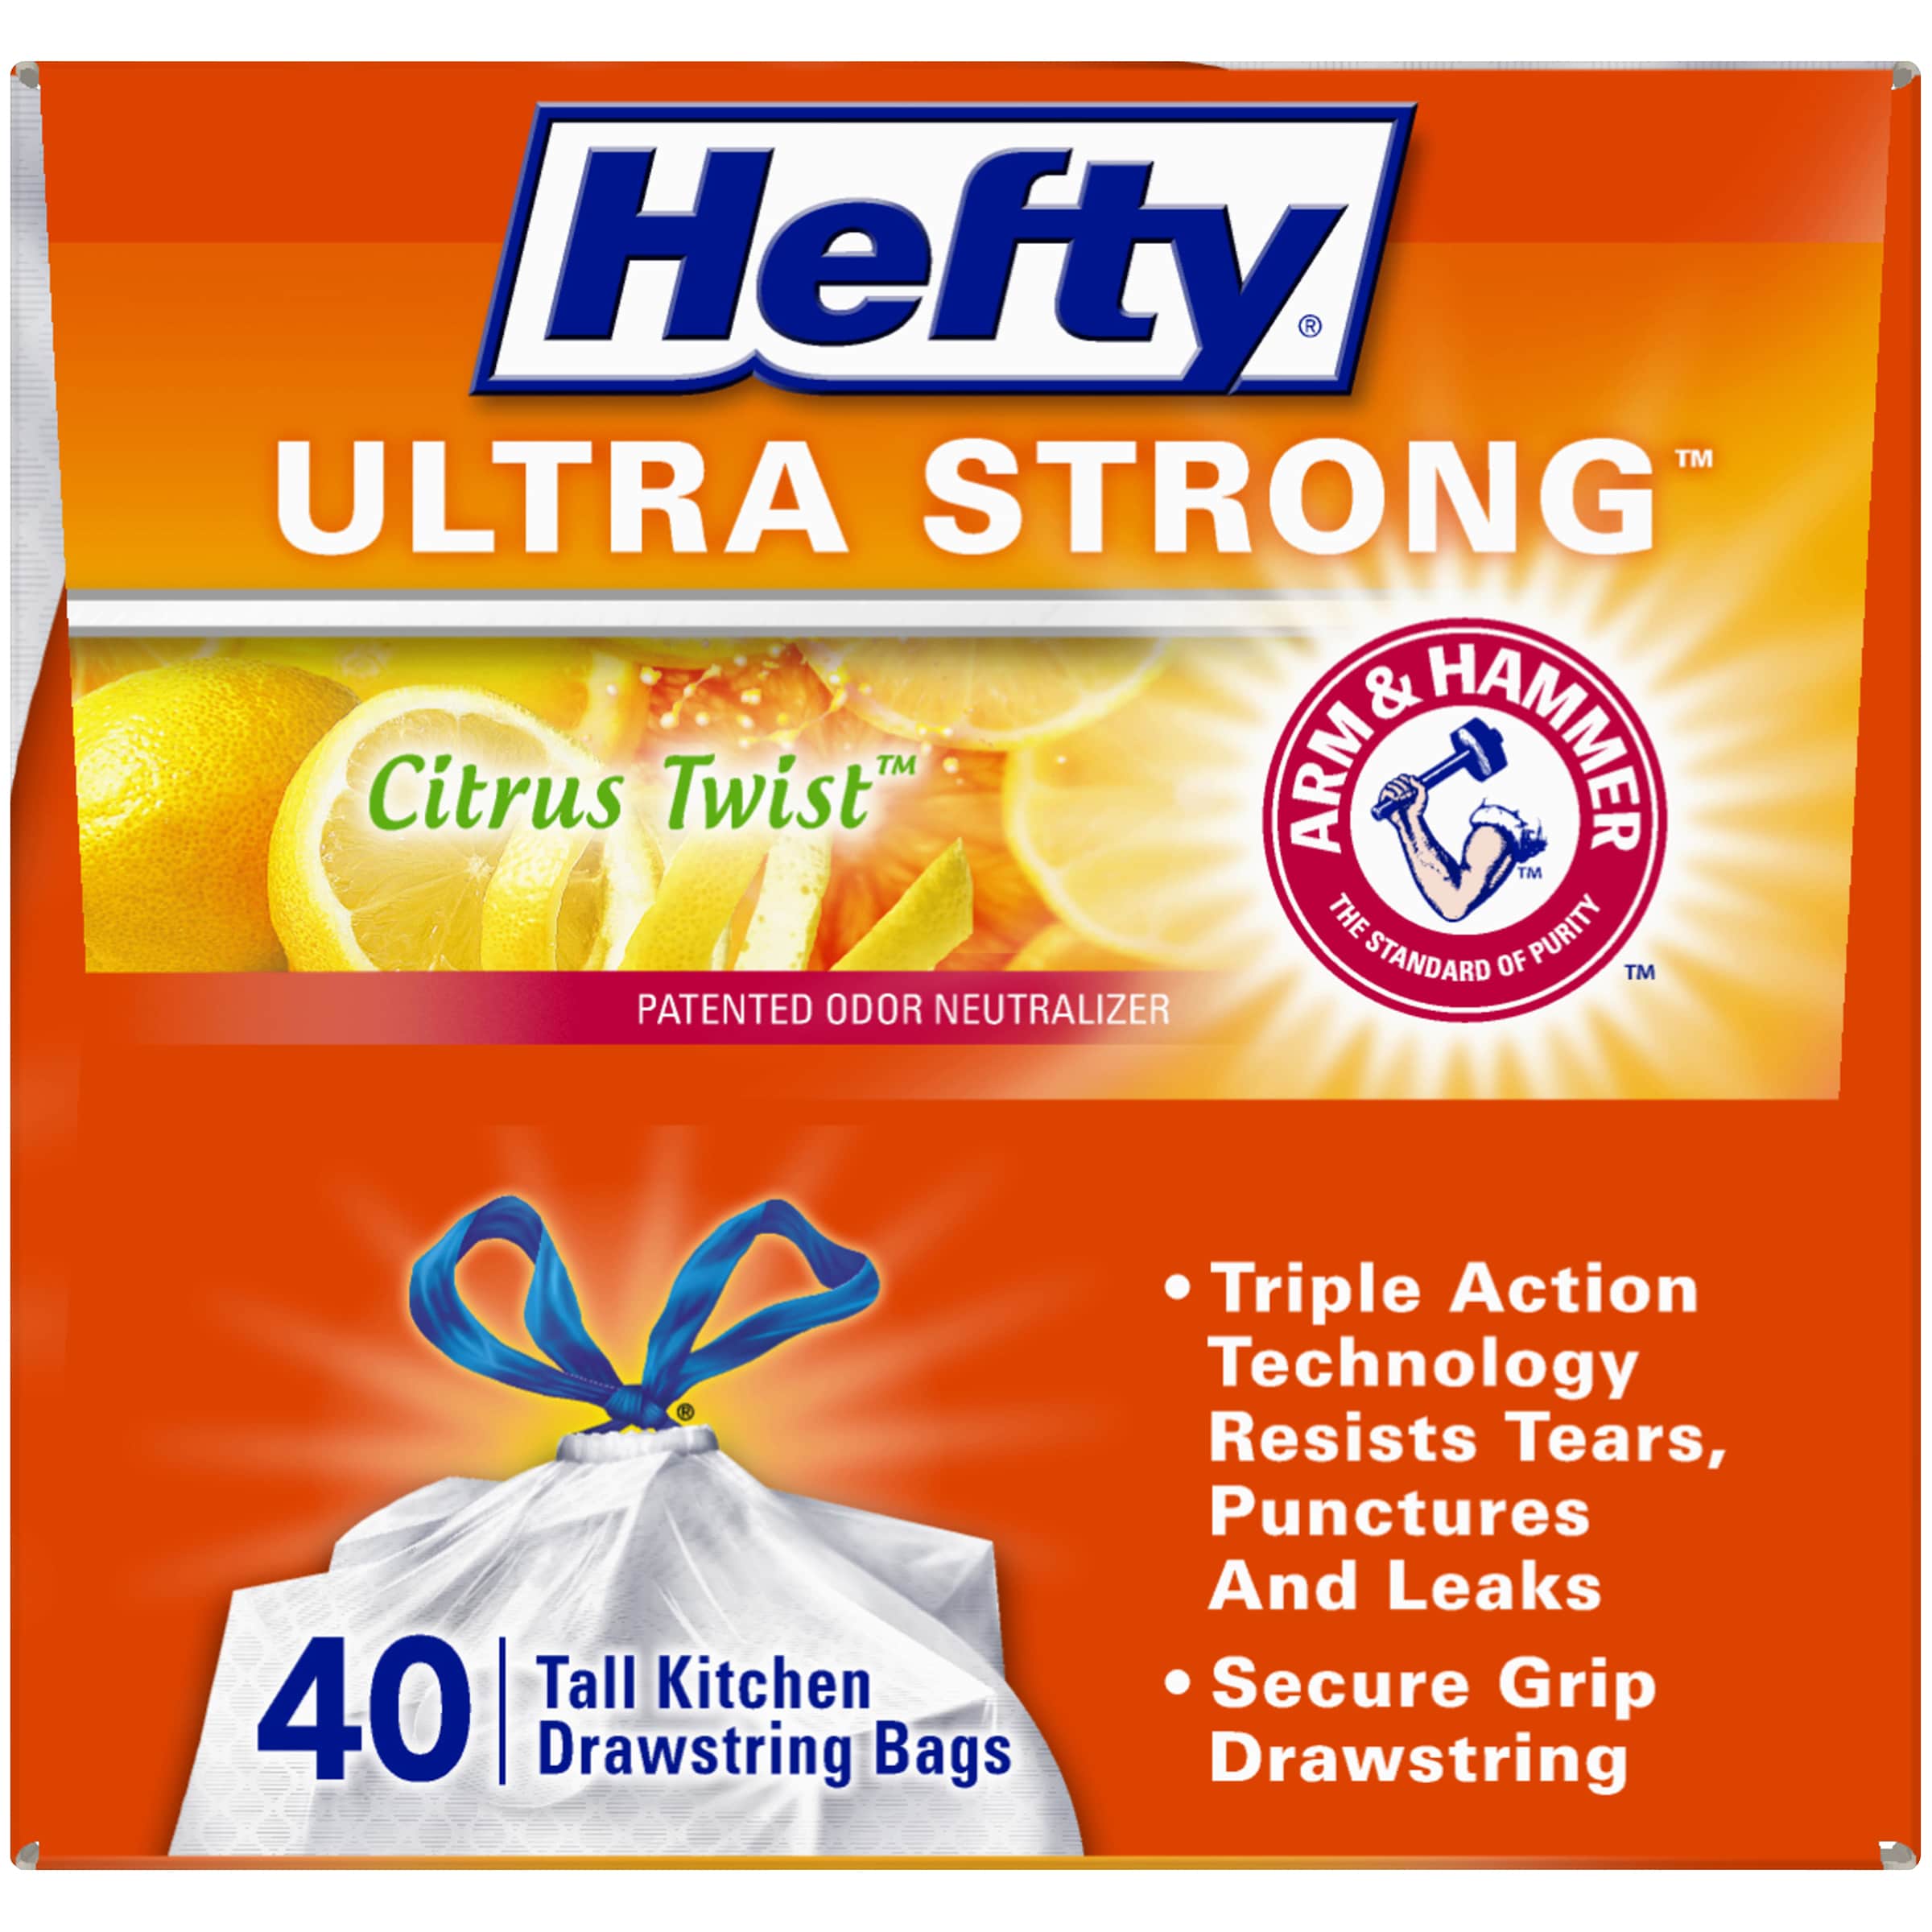 Hefty Ultra Strong Clean Burst Scent Trash Bags (Pack of 3), 3 packs -  Kroger